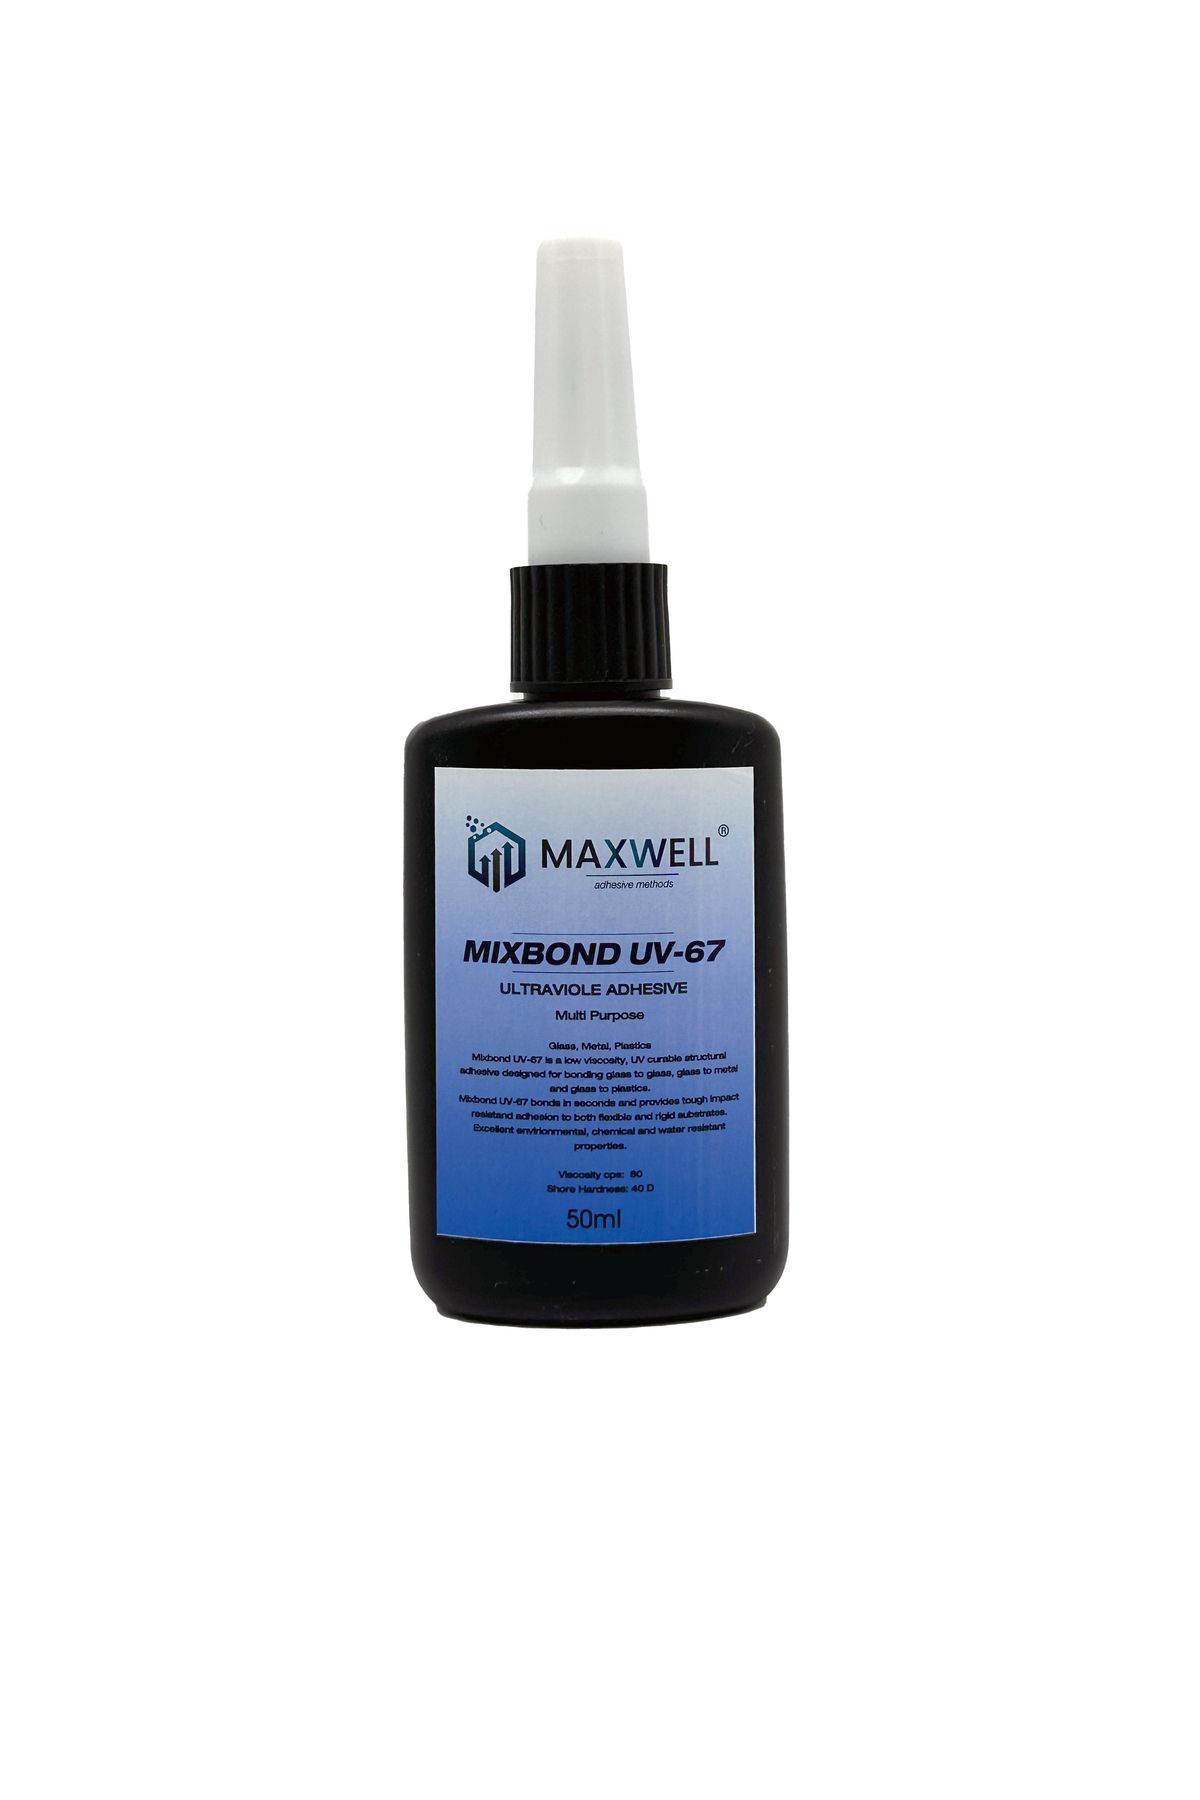 Maxwell Mixbond Uv-67 50ml.